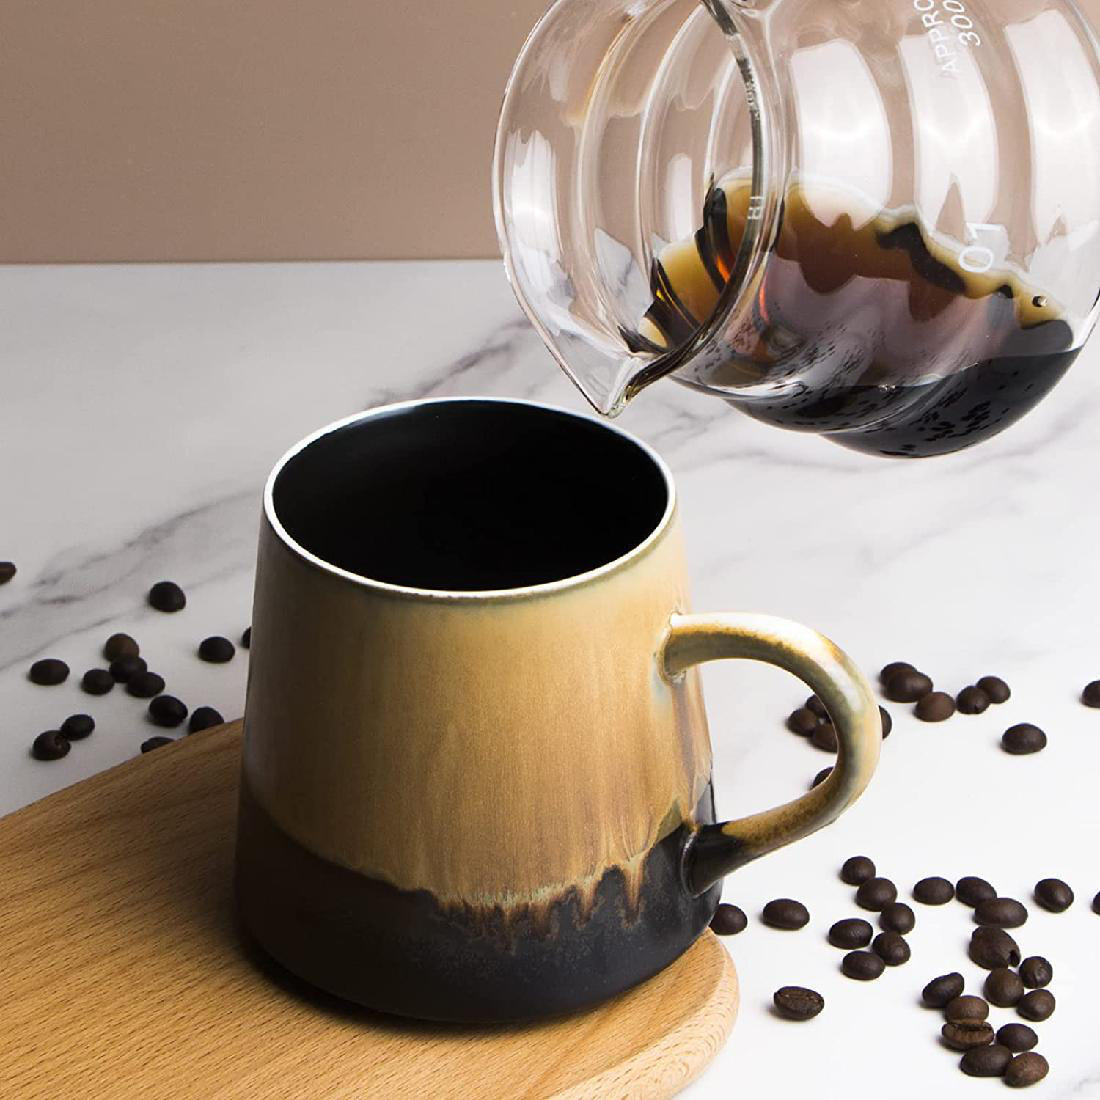 Pottery handmade ceramic mug water,coffee and tea mug without handle.clay color 